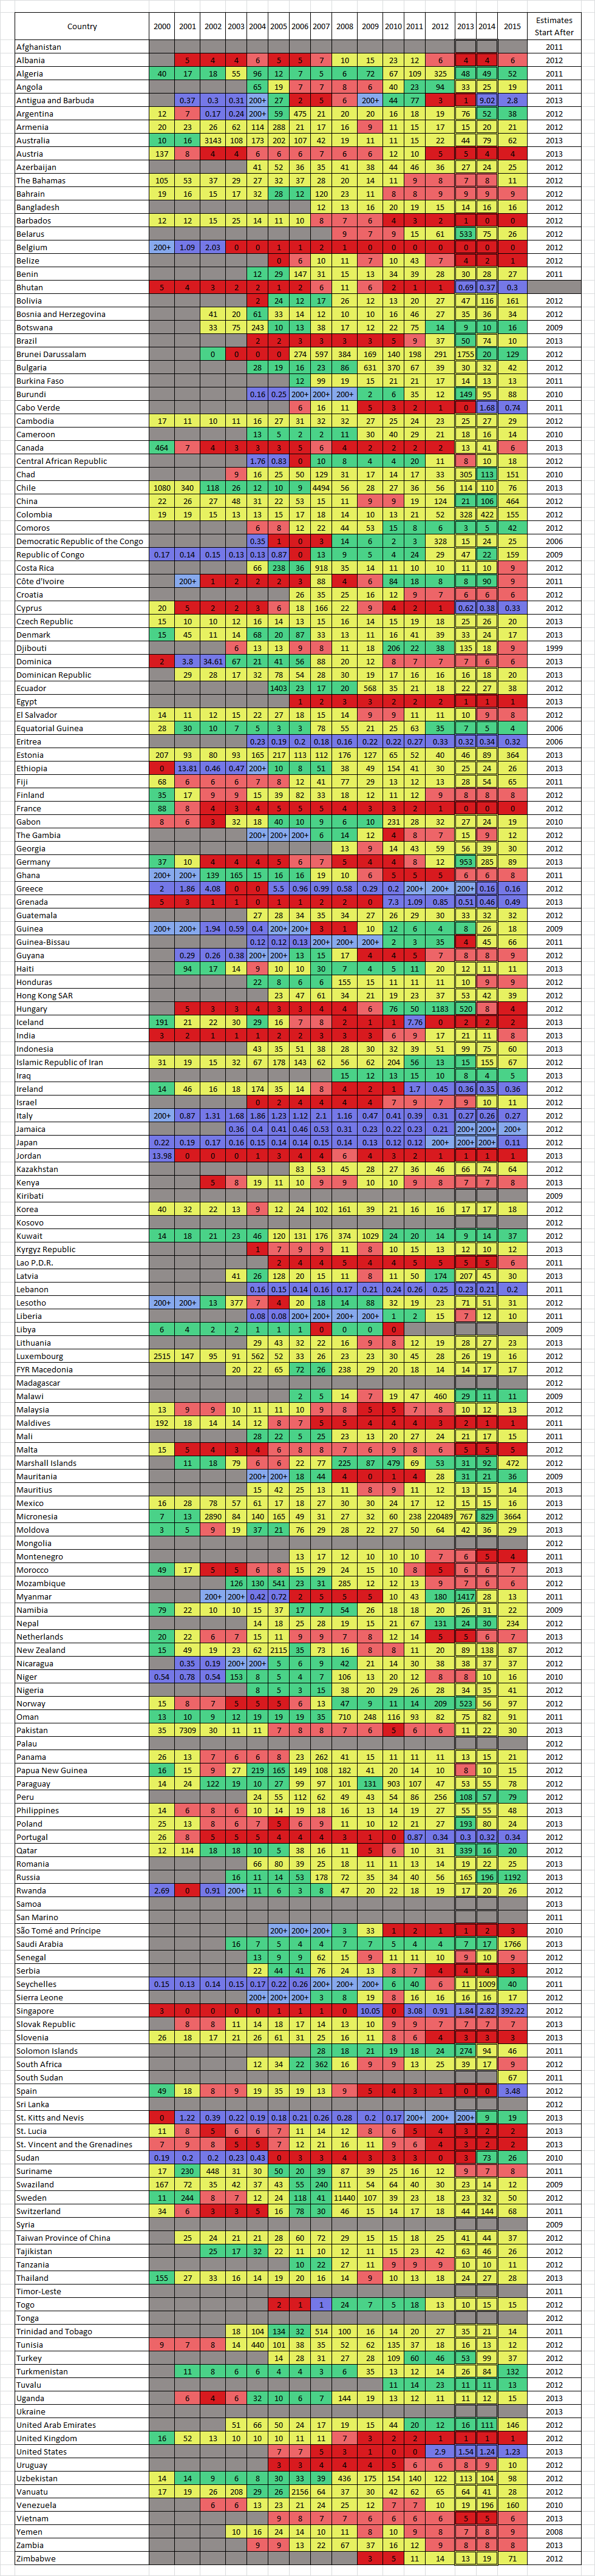 Default Velocity Index Table